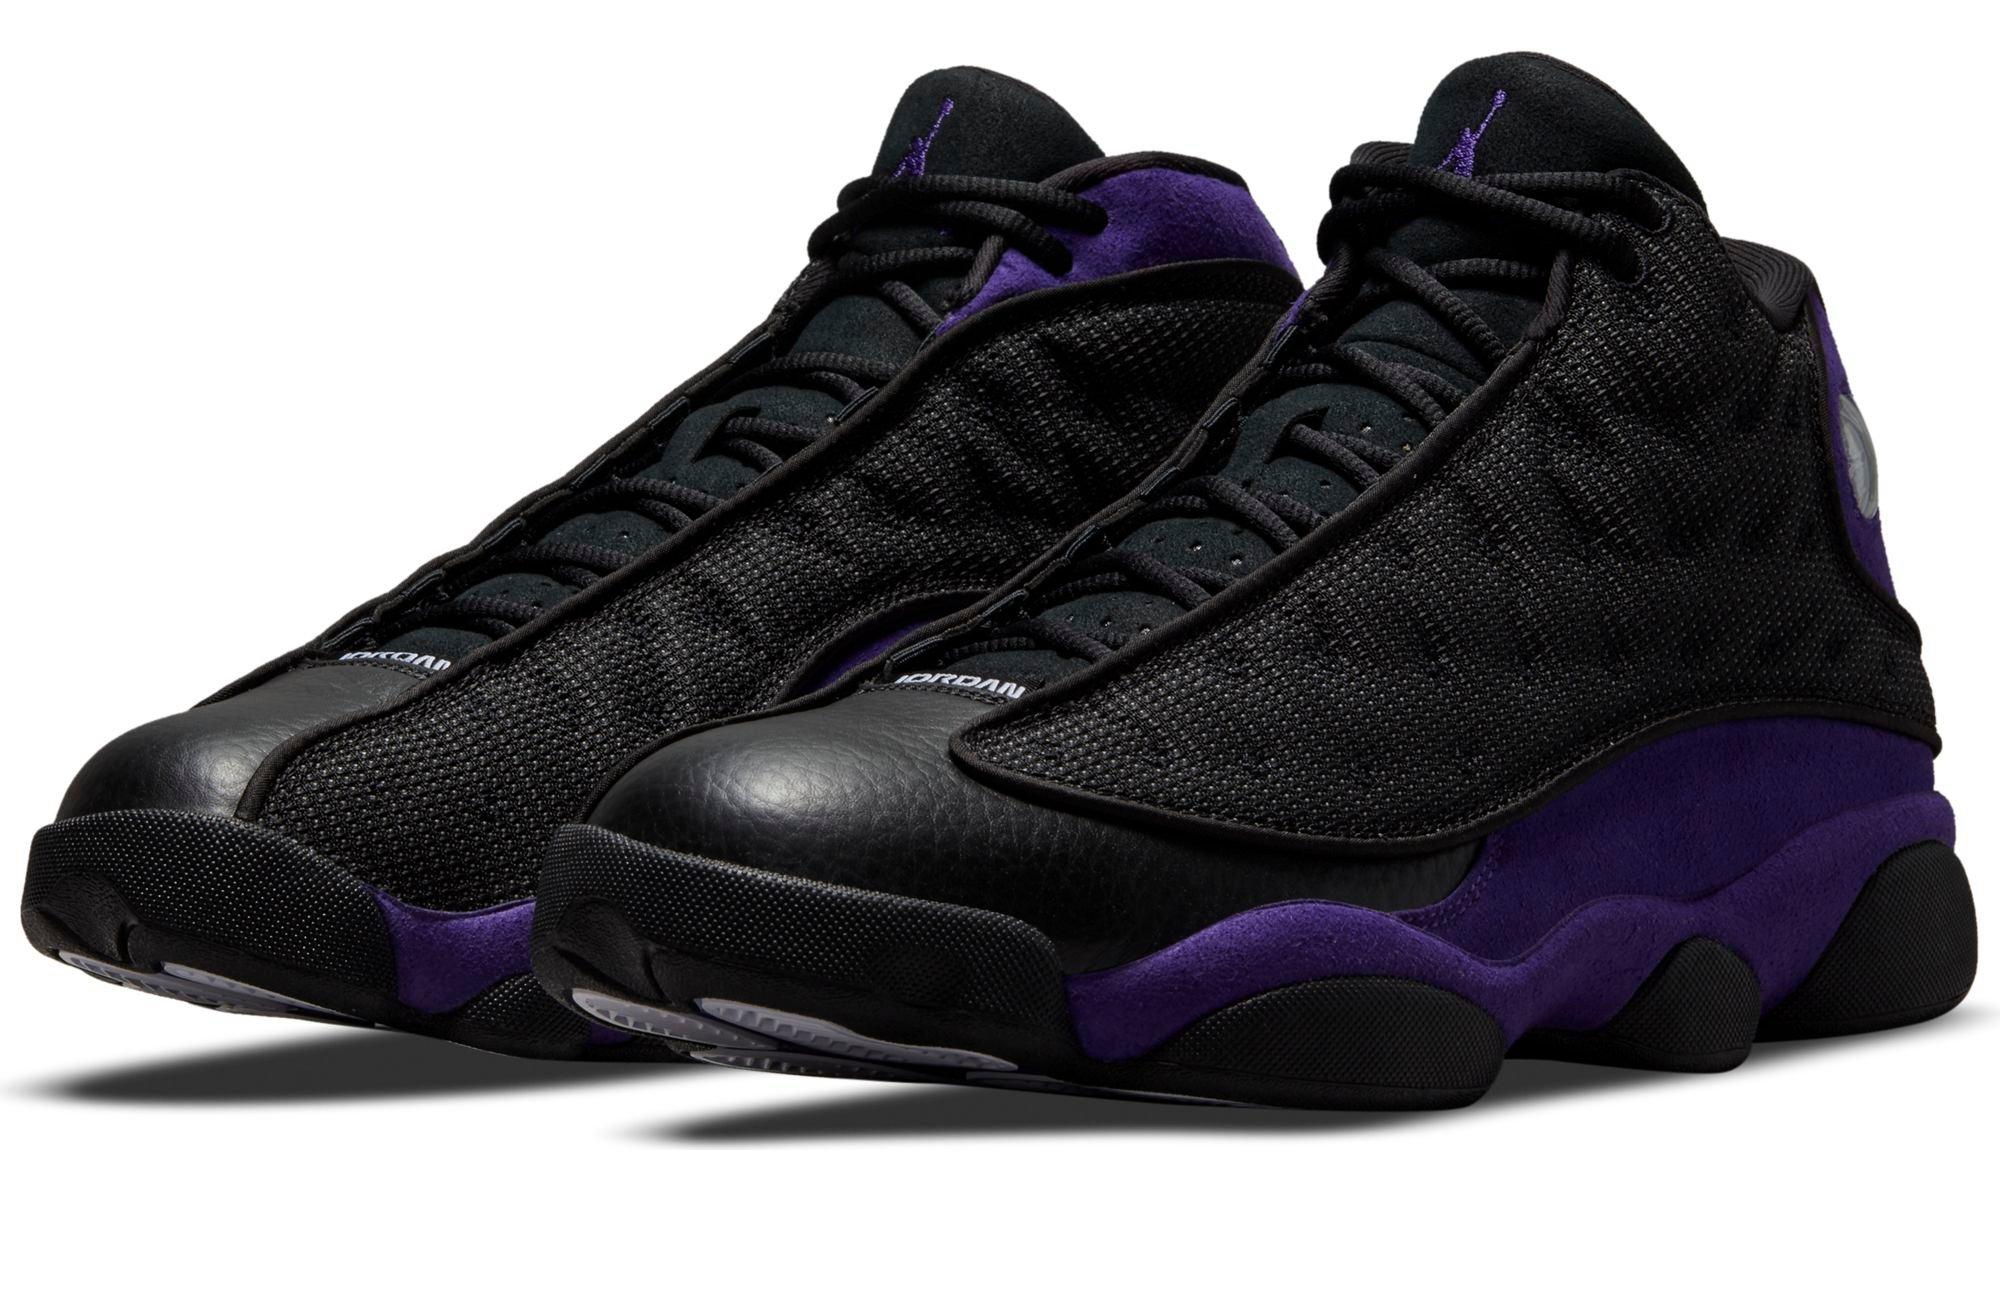 Sneakers Release – Jordan 13 Retro “Black/Court Purple/White” Men's Kids' Shoes 1/8